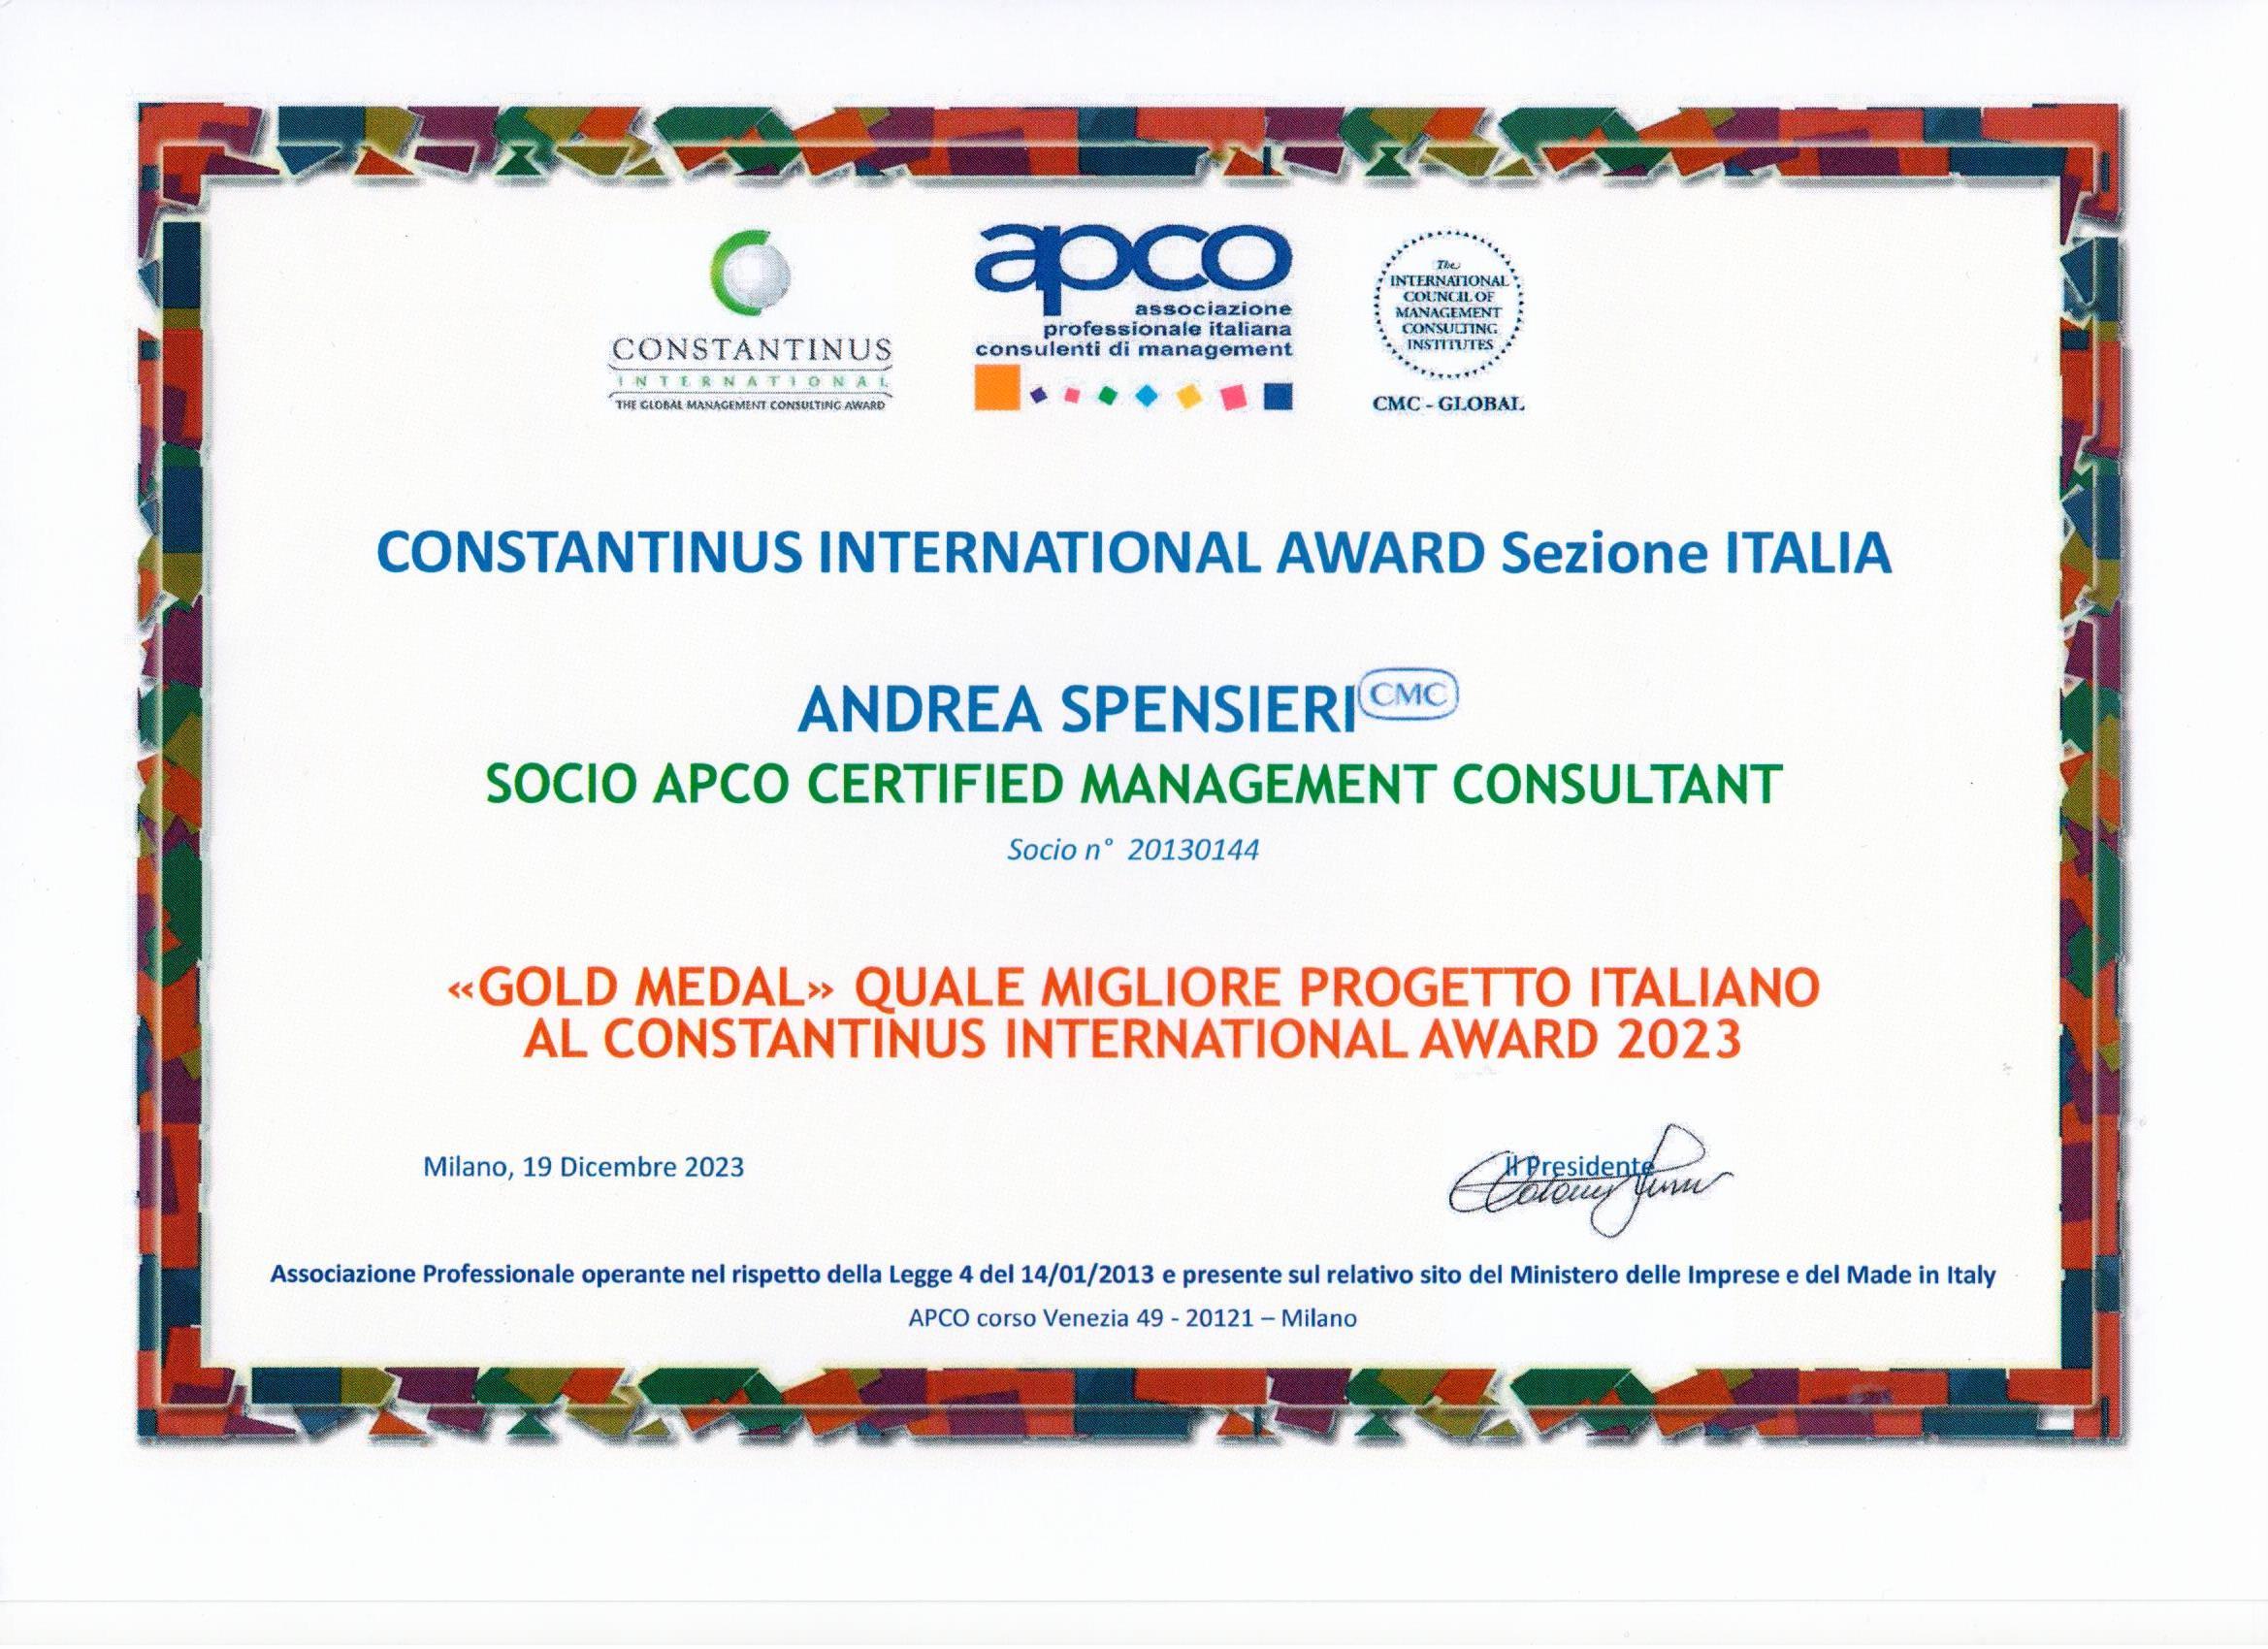 Constantinus International Award